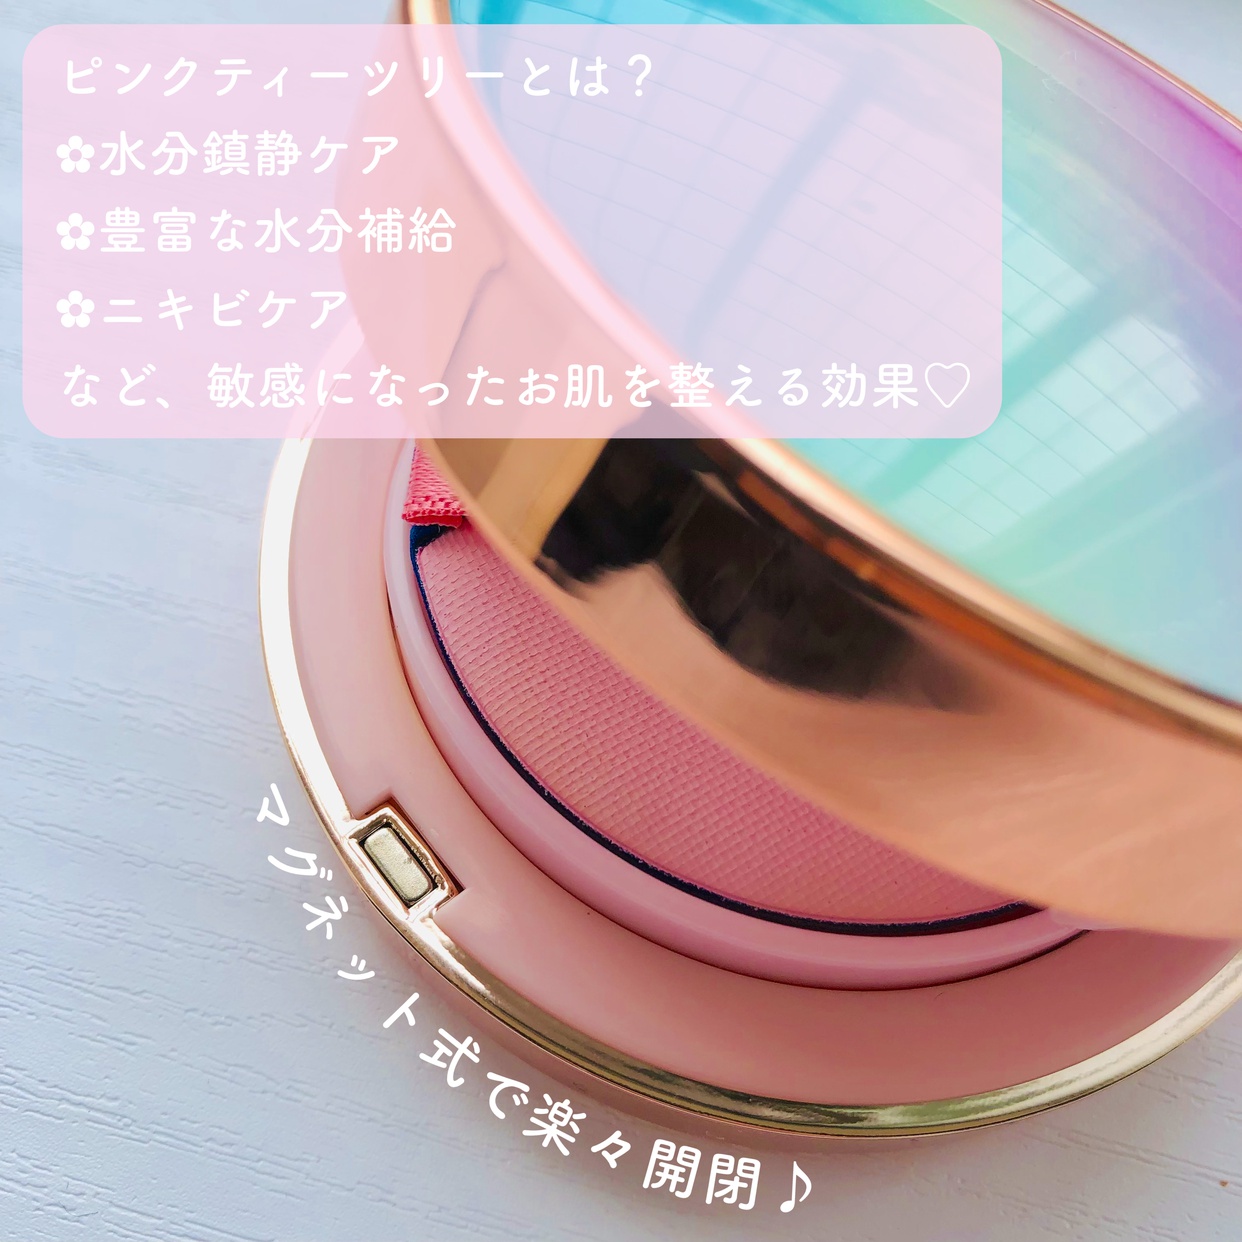 APLIN(アプリン) ピンクティーツリーカバークッションの良い点・メリットに関するsachikoさんの口コミ画像3